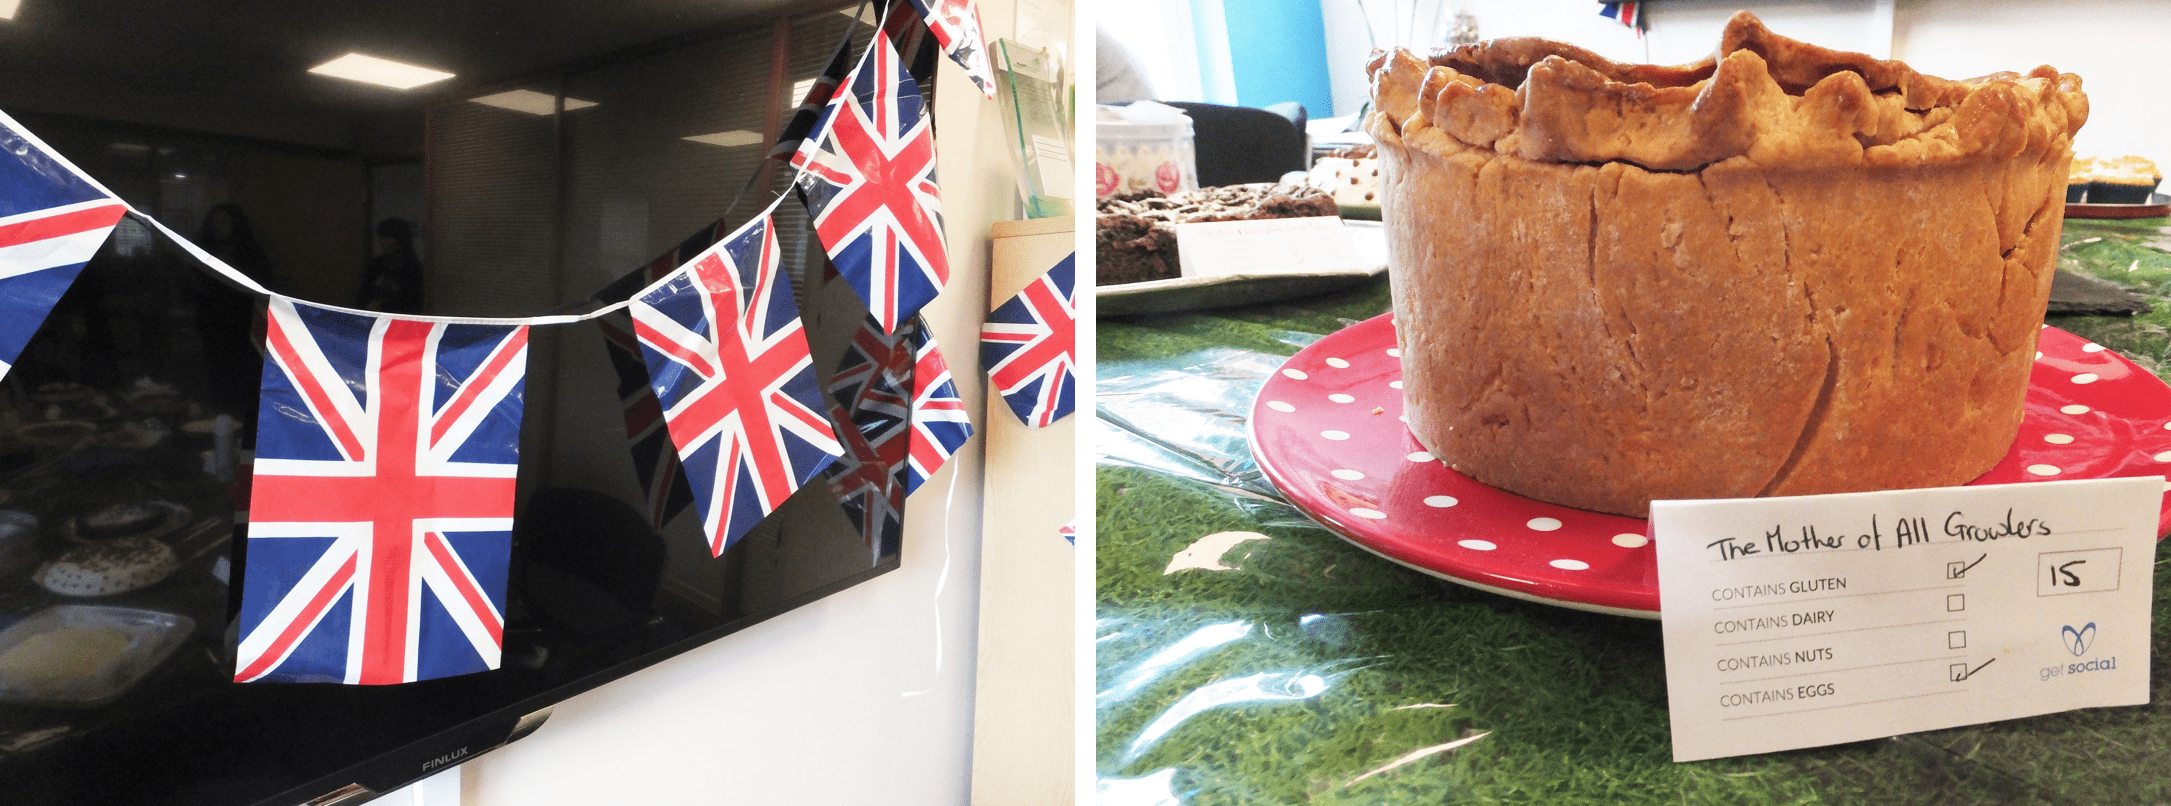 british-bake-off